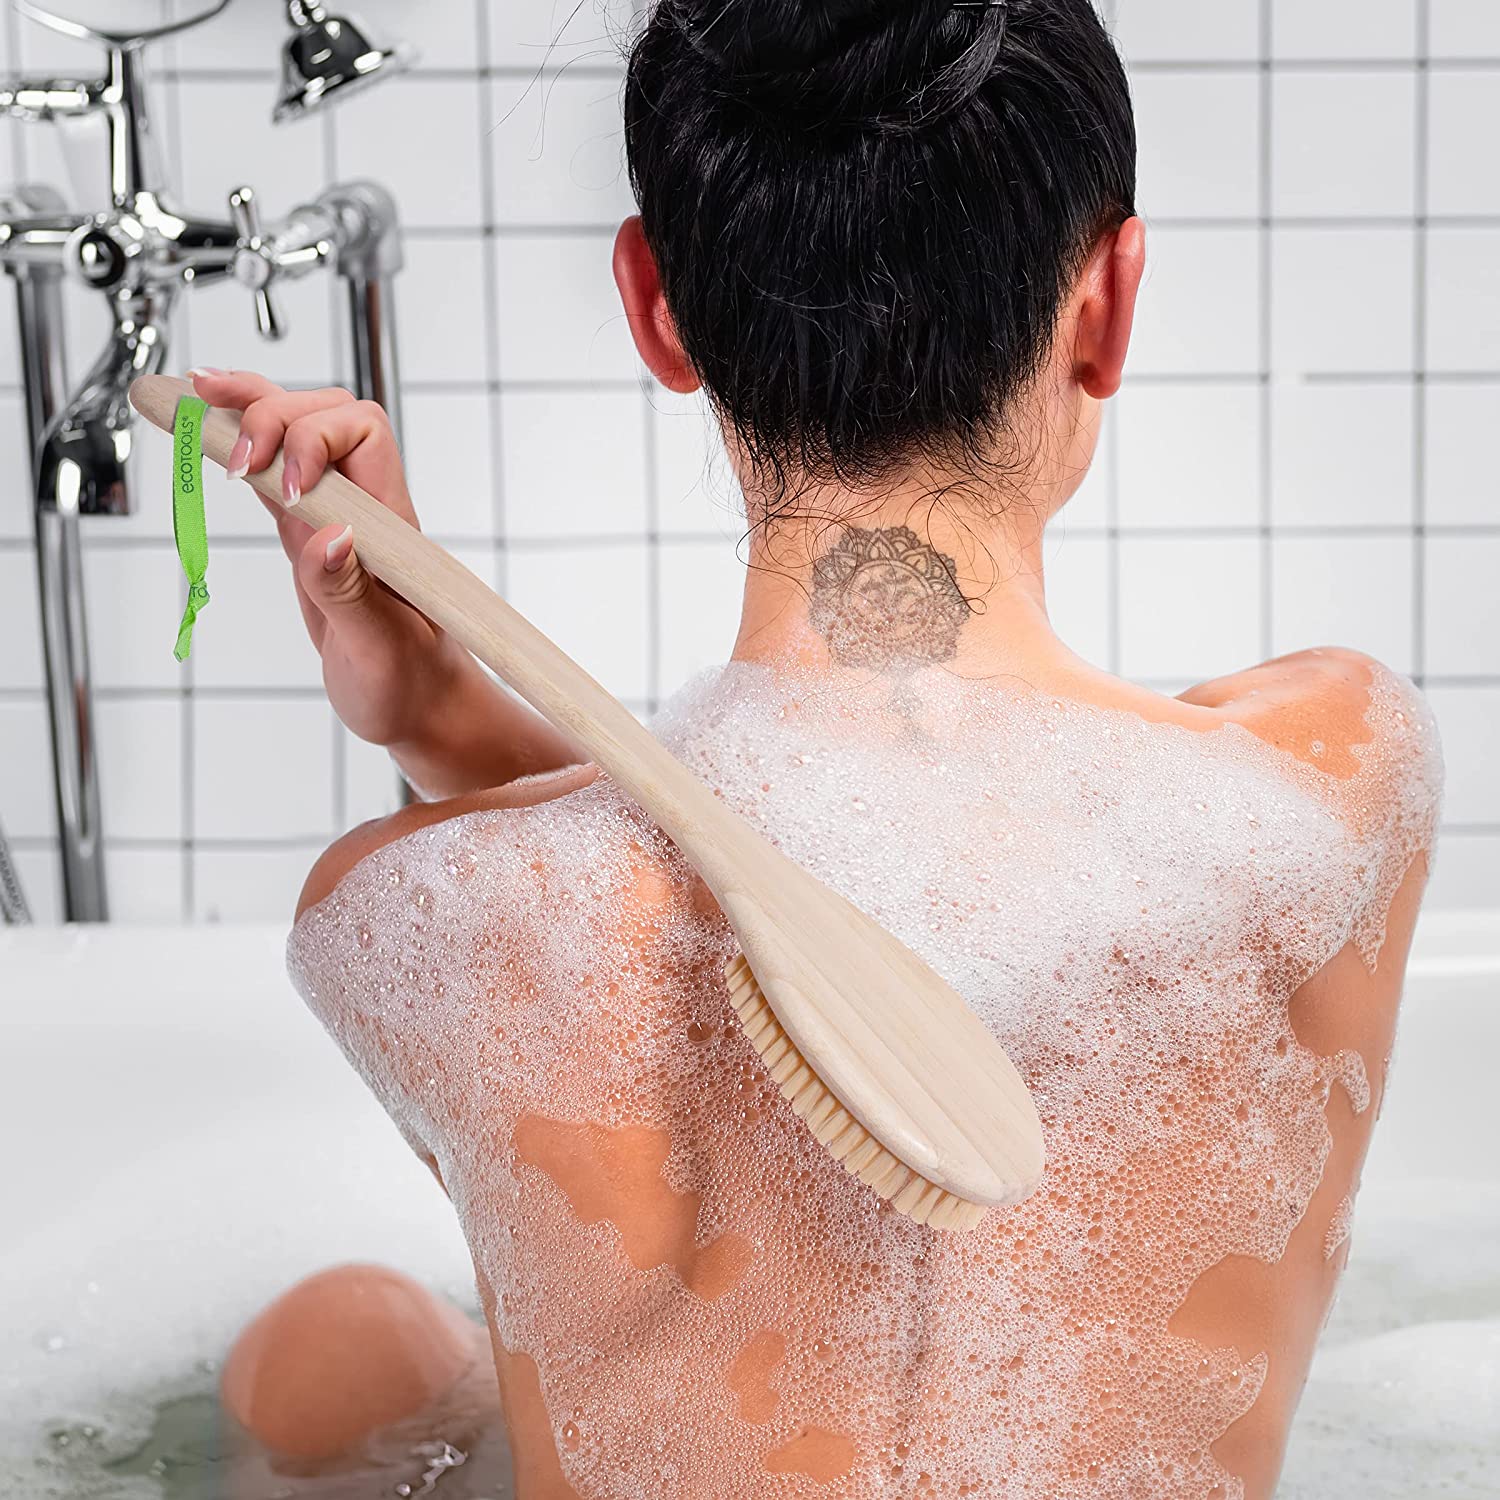 Best Back Scrubber For Shower – June 2023